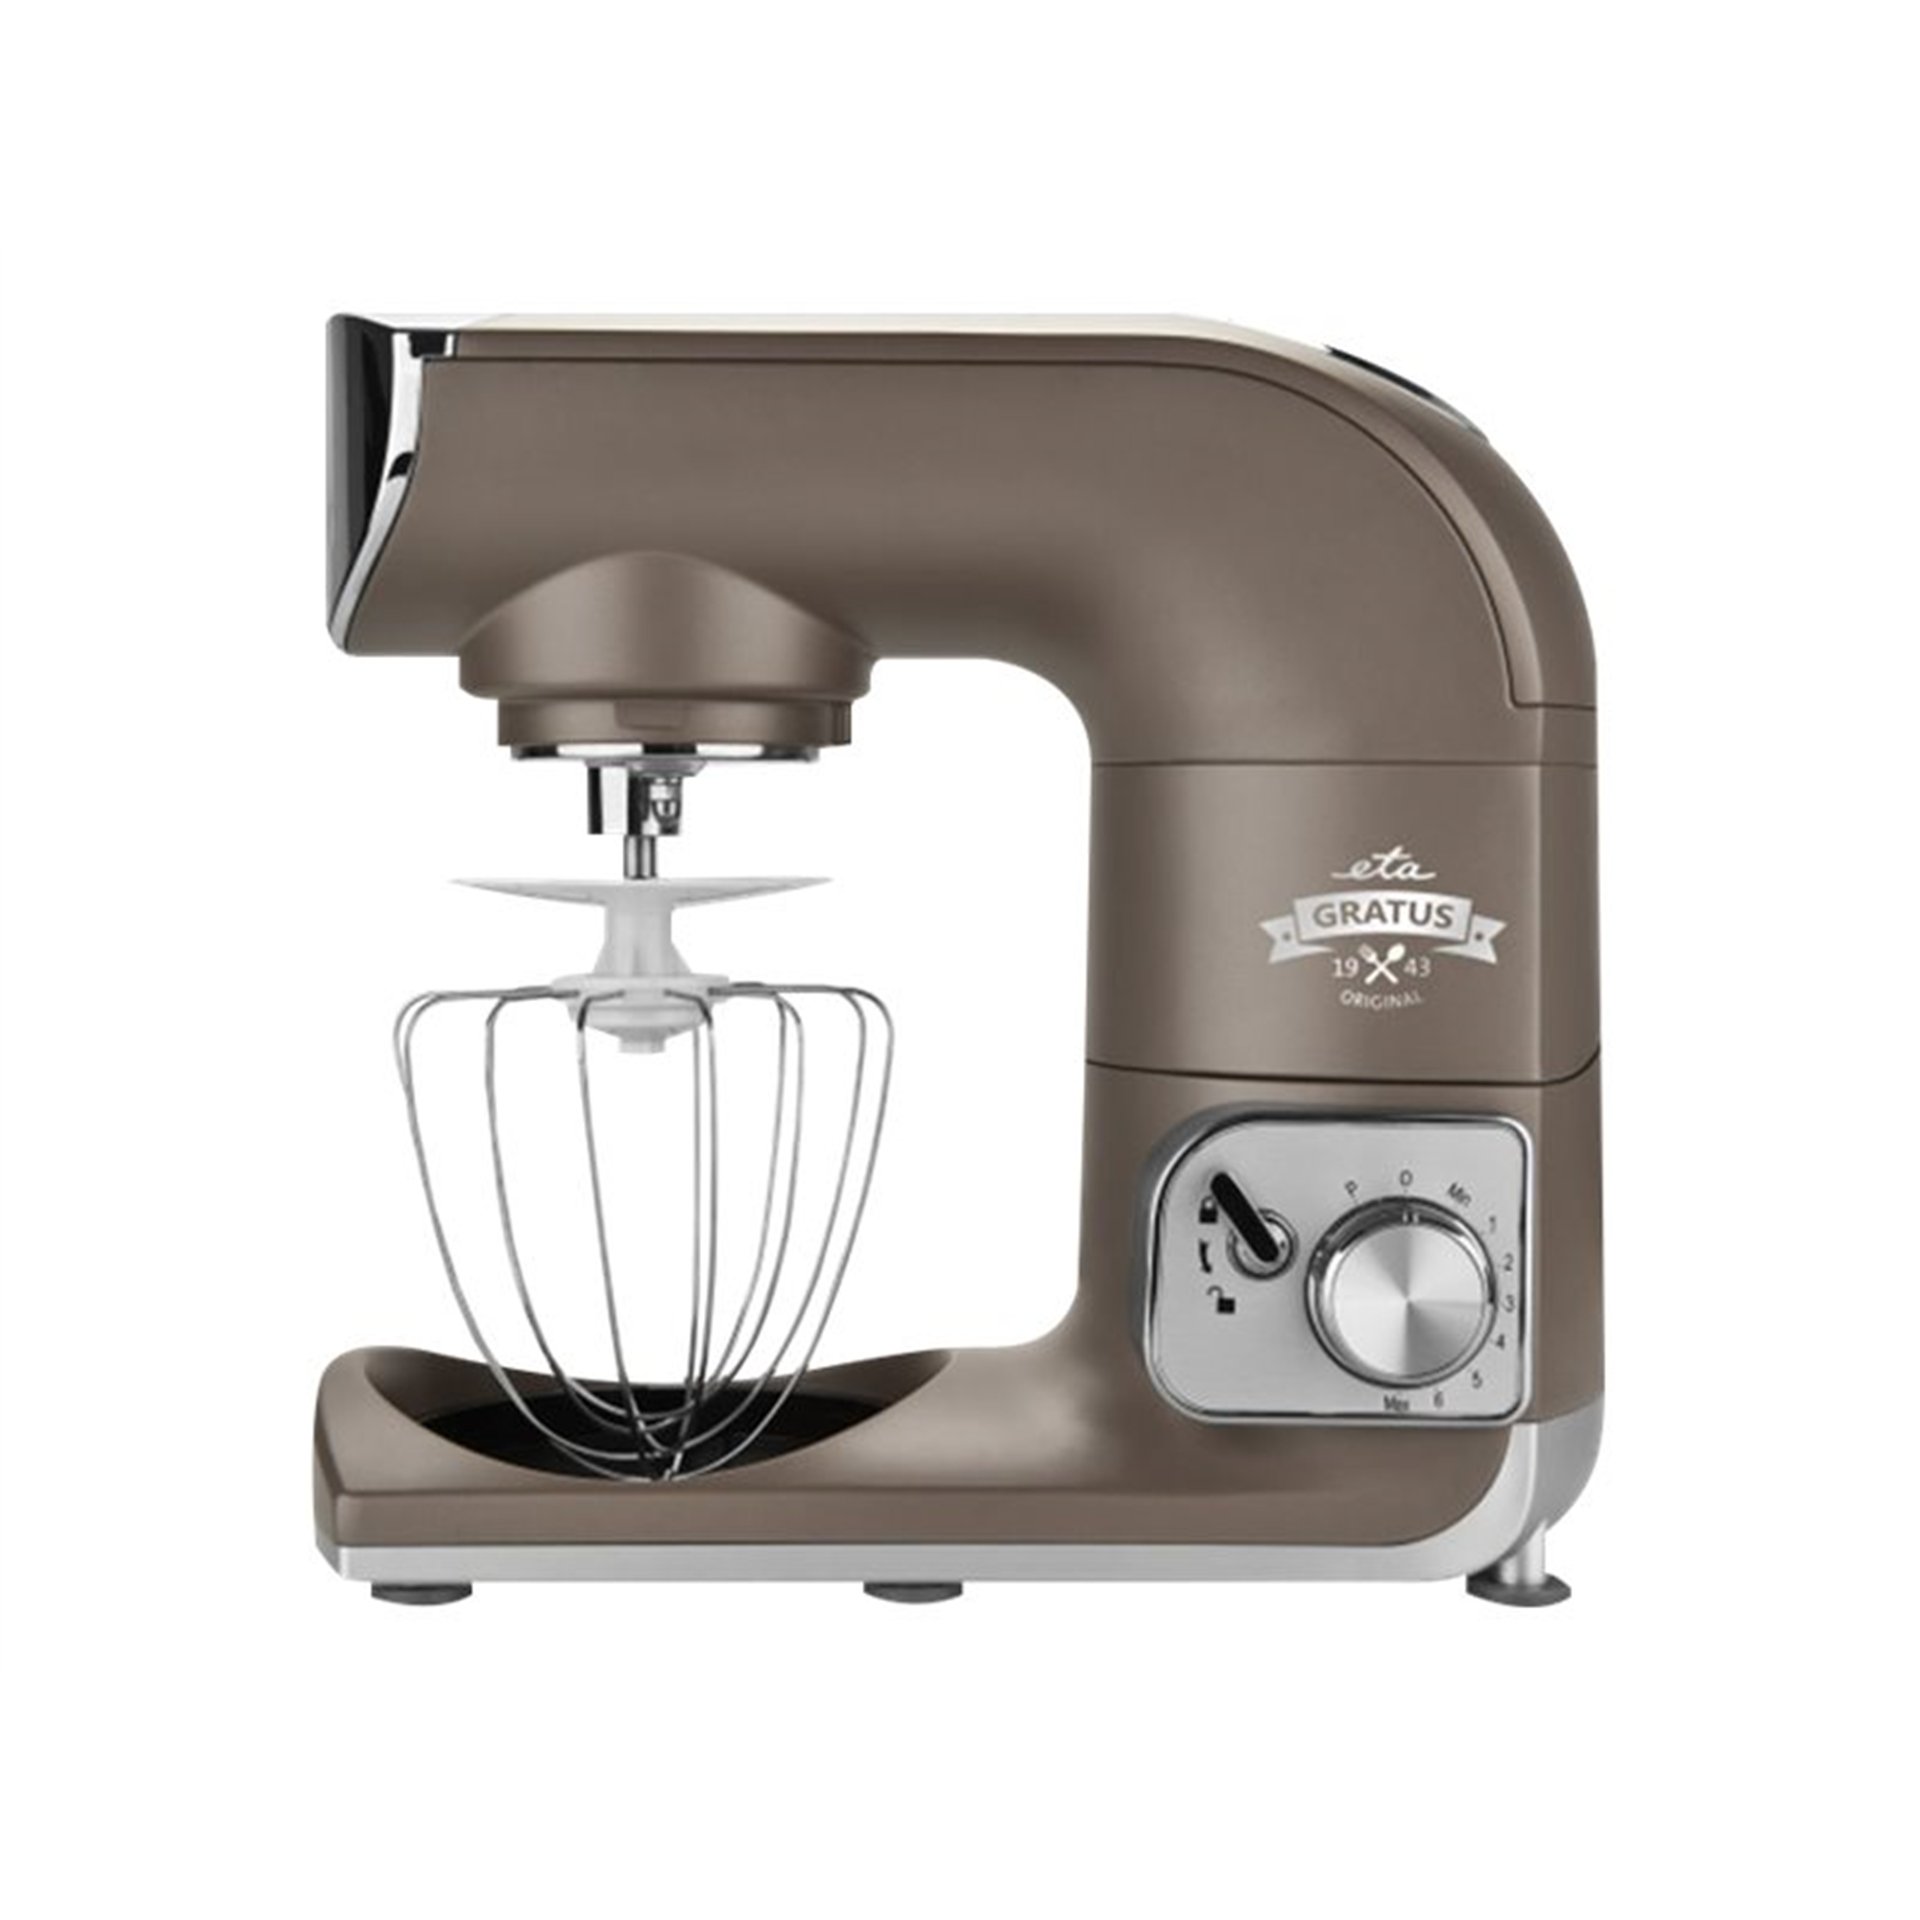 ETA Kitchen machine Gratus Original ETA002890030 1200 W Number of speeds 8 Bowl capacity 5.5 L Blender Light brown